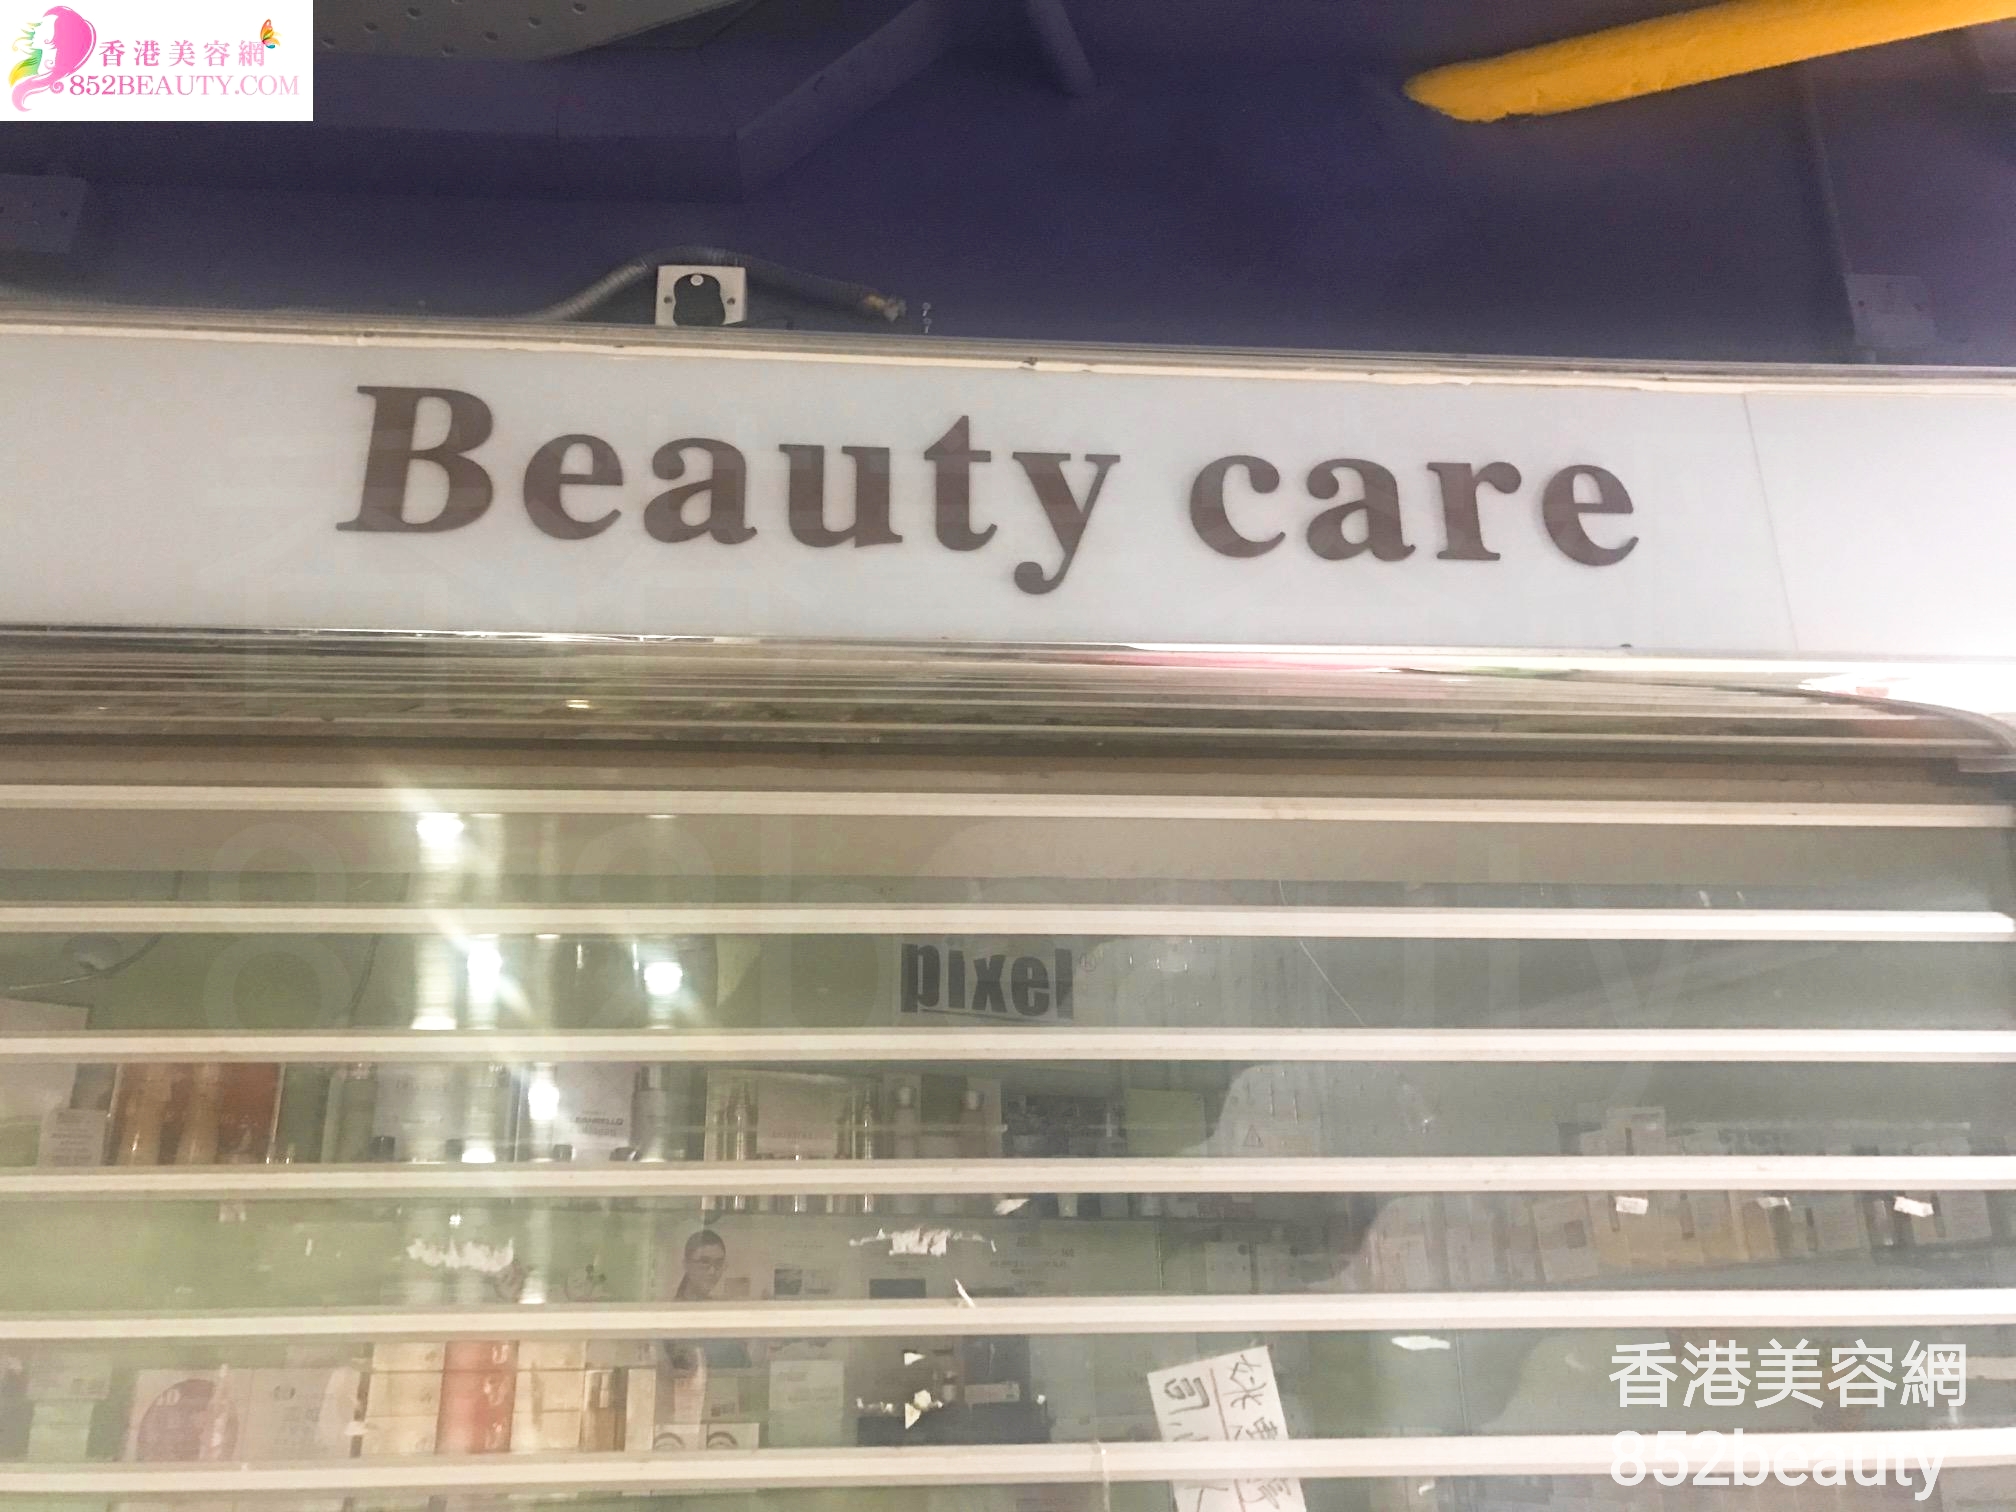 香港美容網 Hong Kong Beauty Salon 美容院 / 美容師: Beauty care